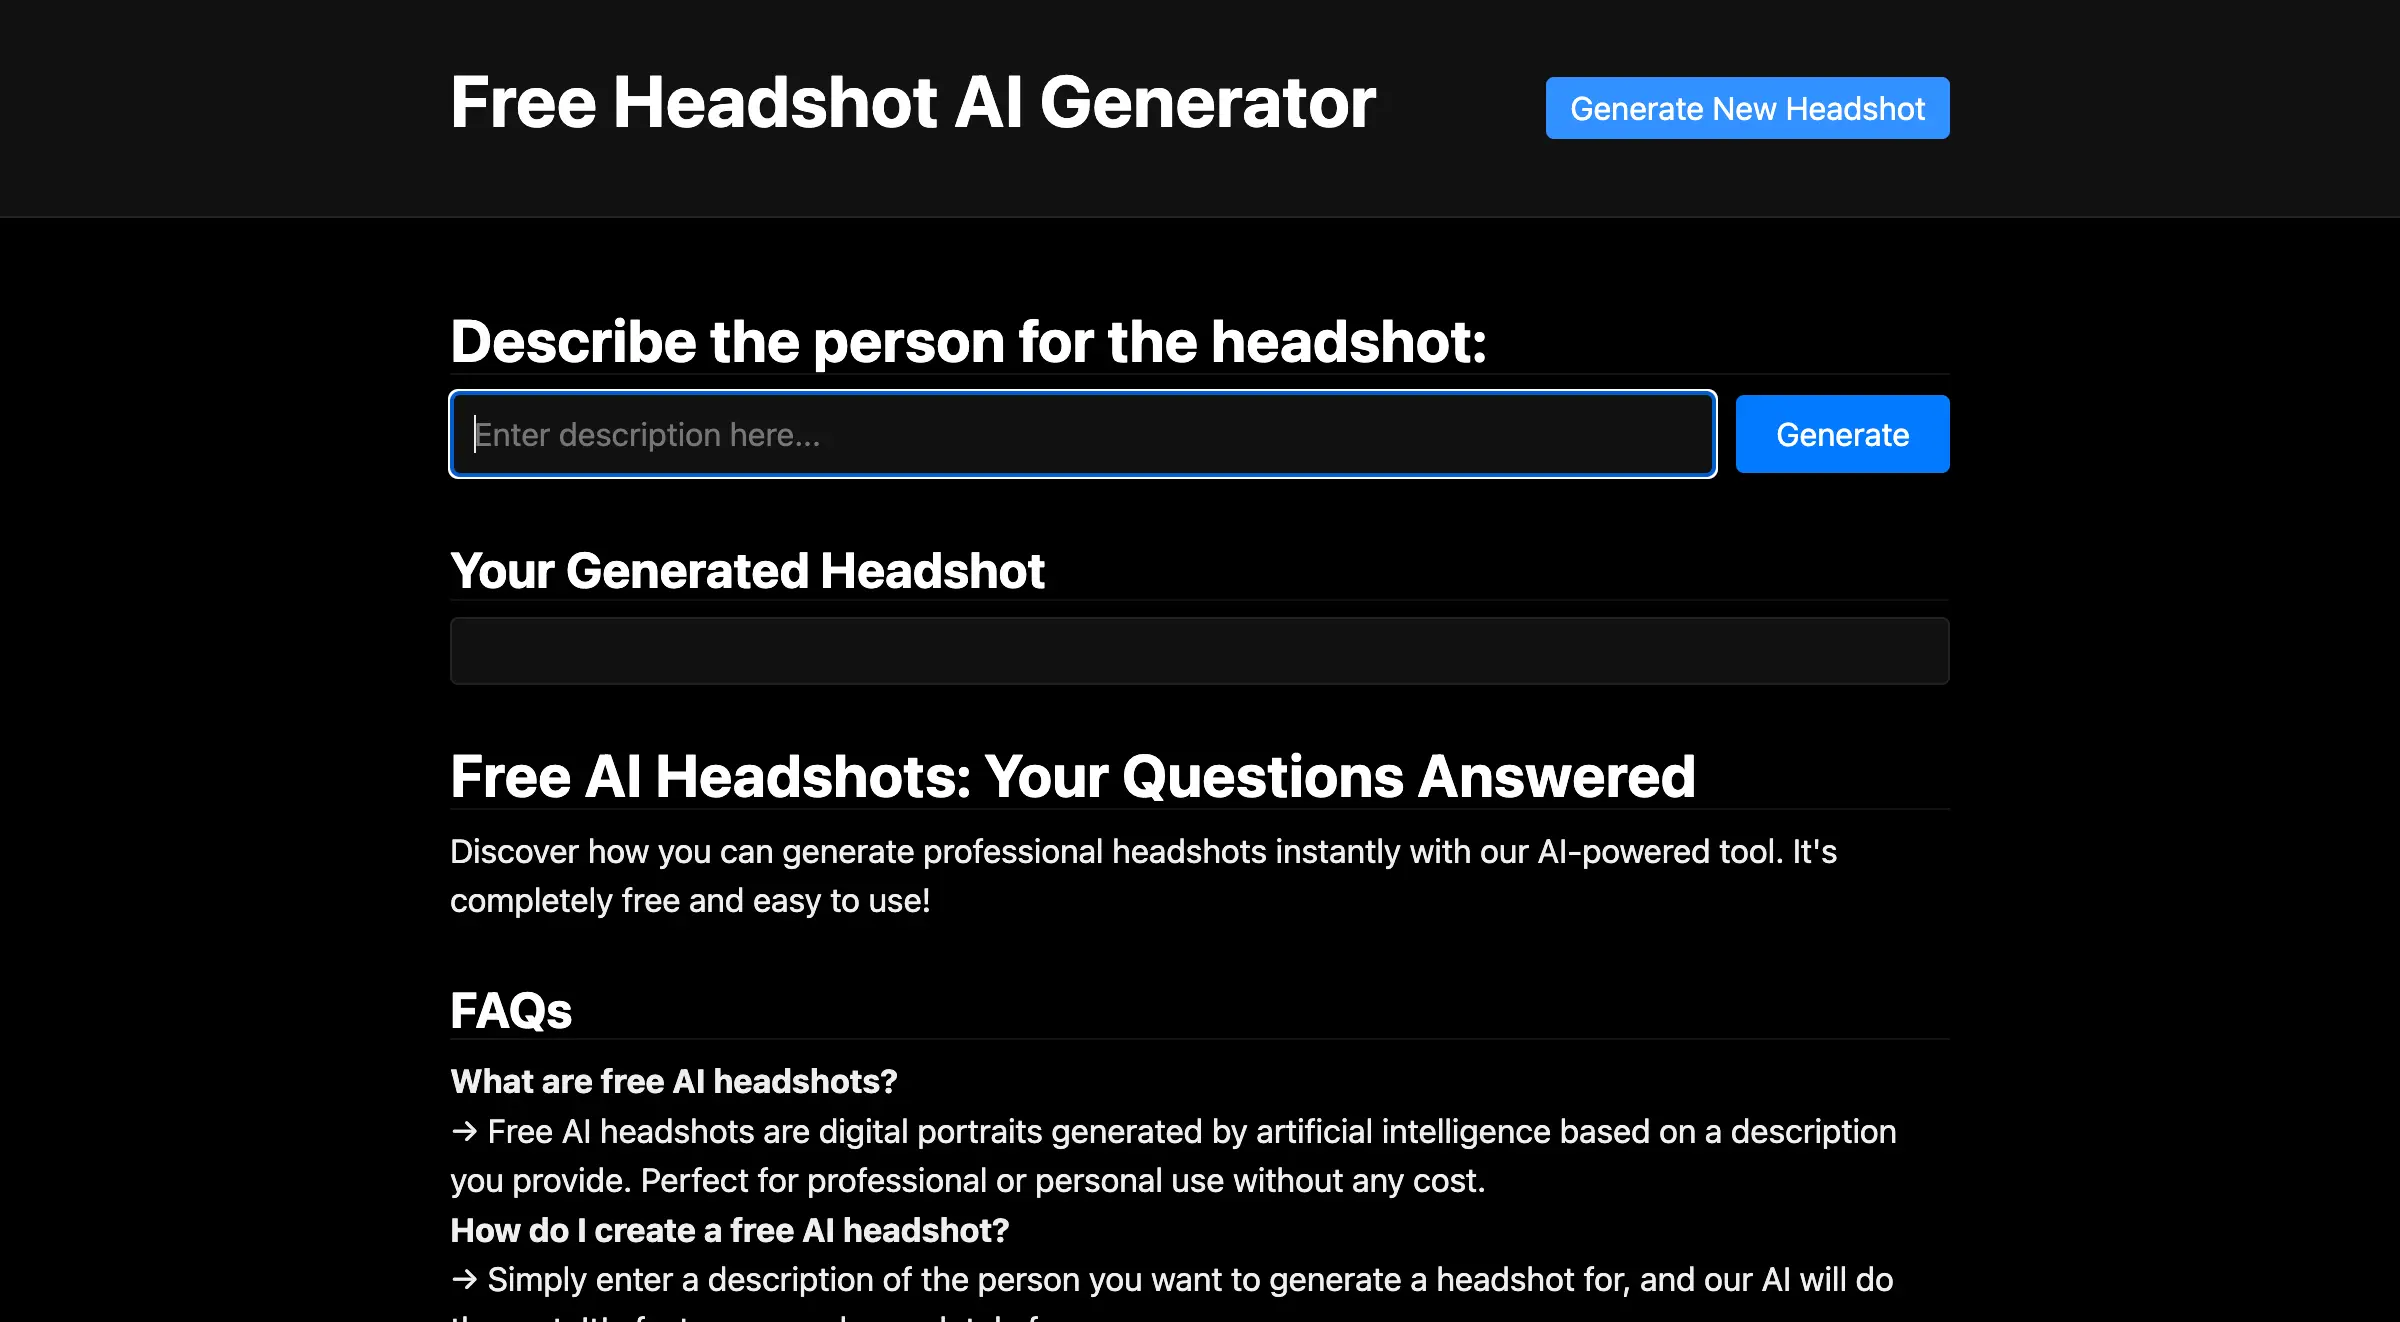 Free Headshot AI Generator